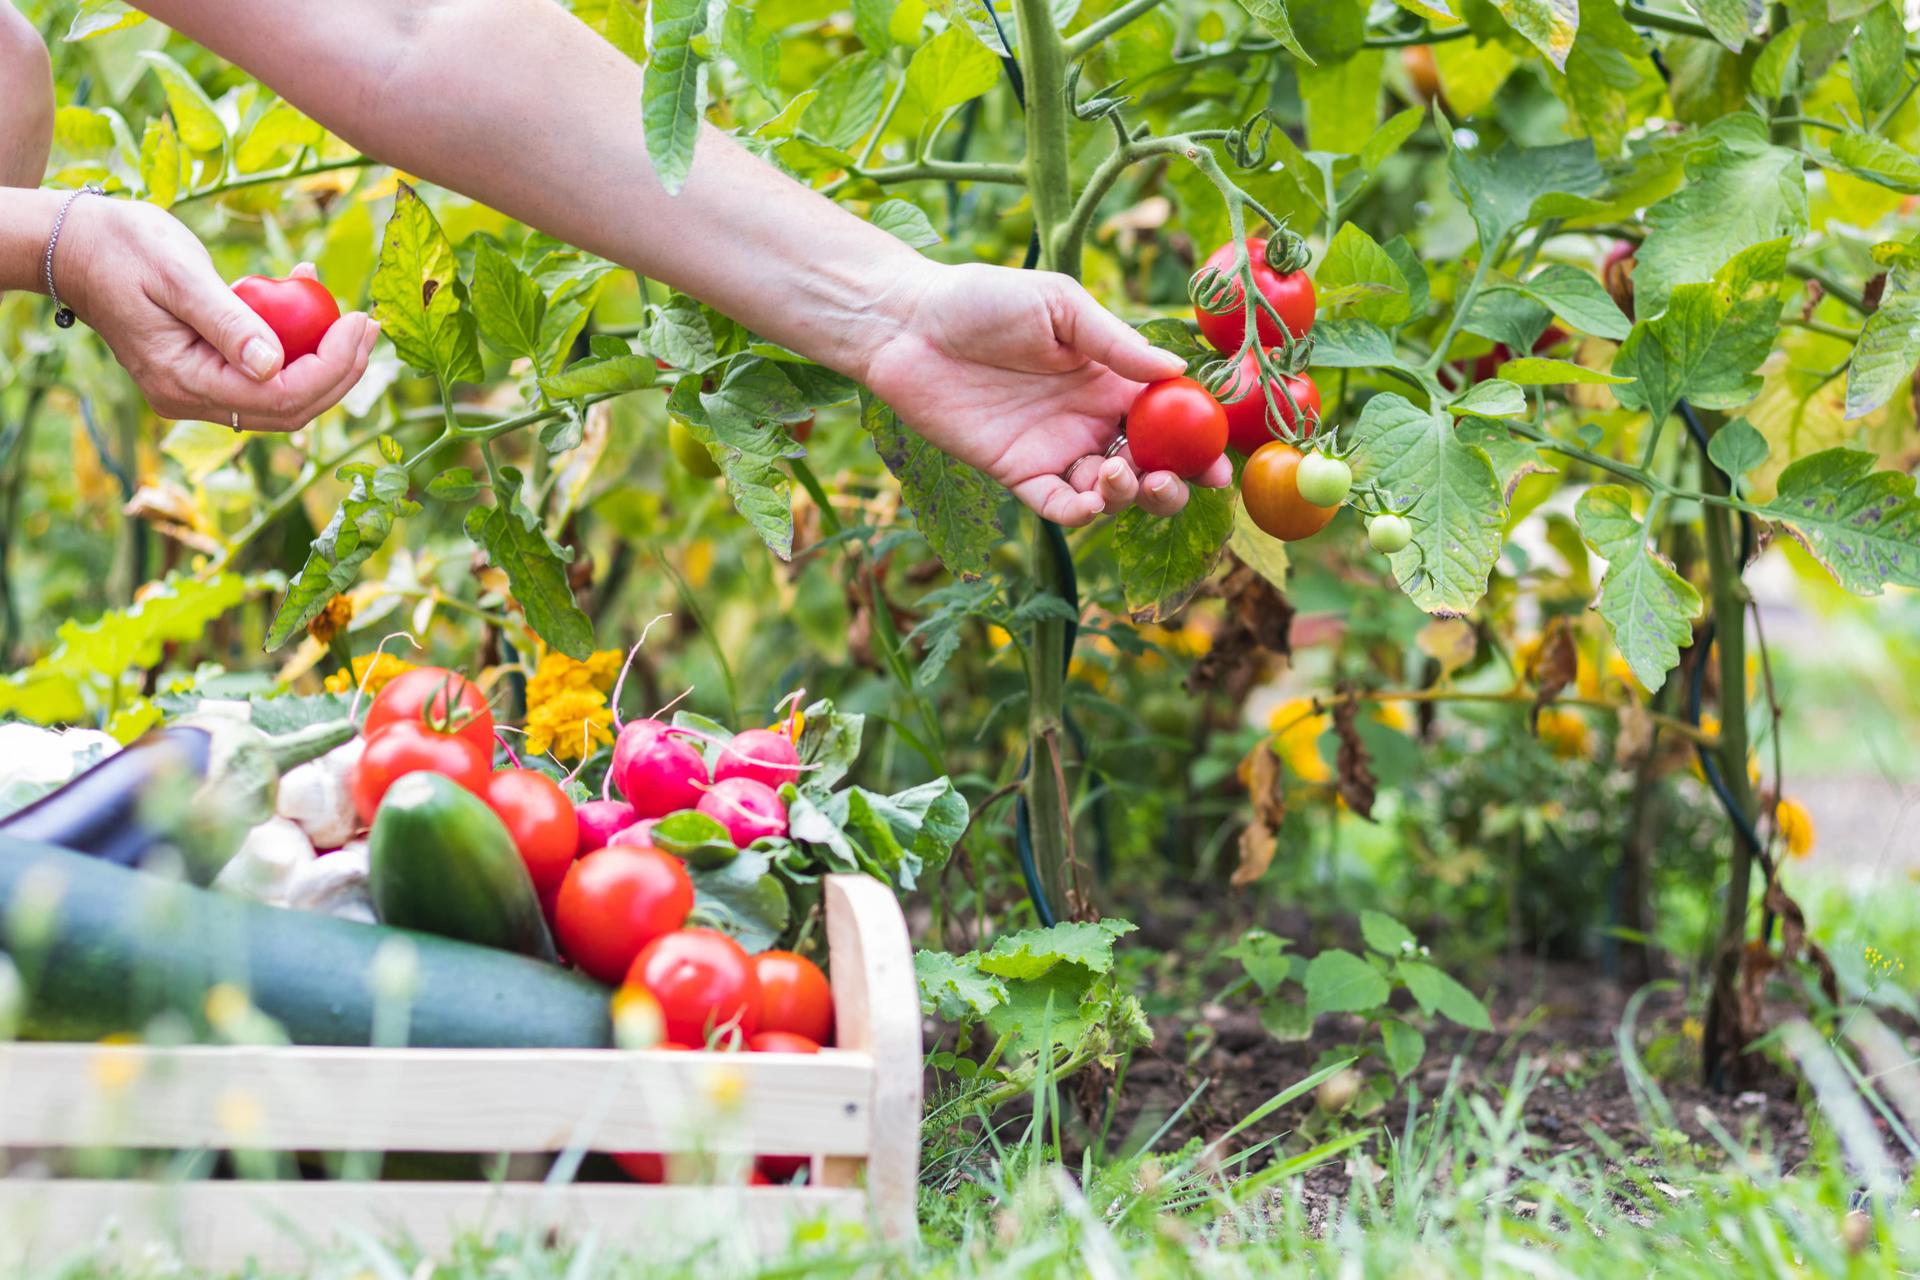 Harvesting Home-Grown Tomatoes